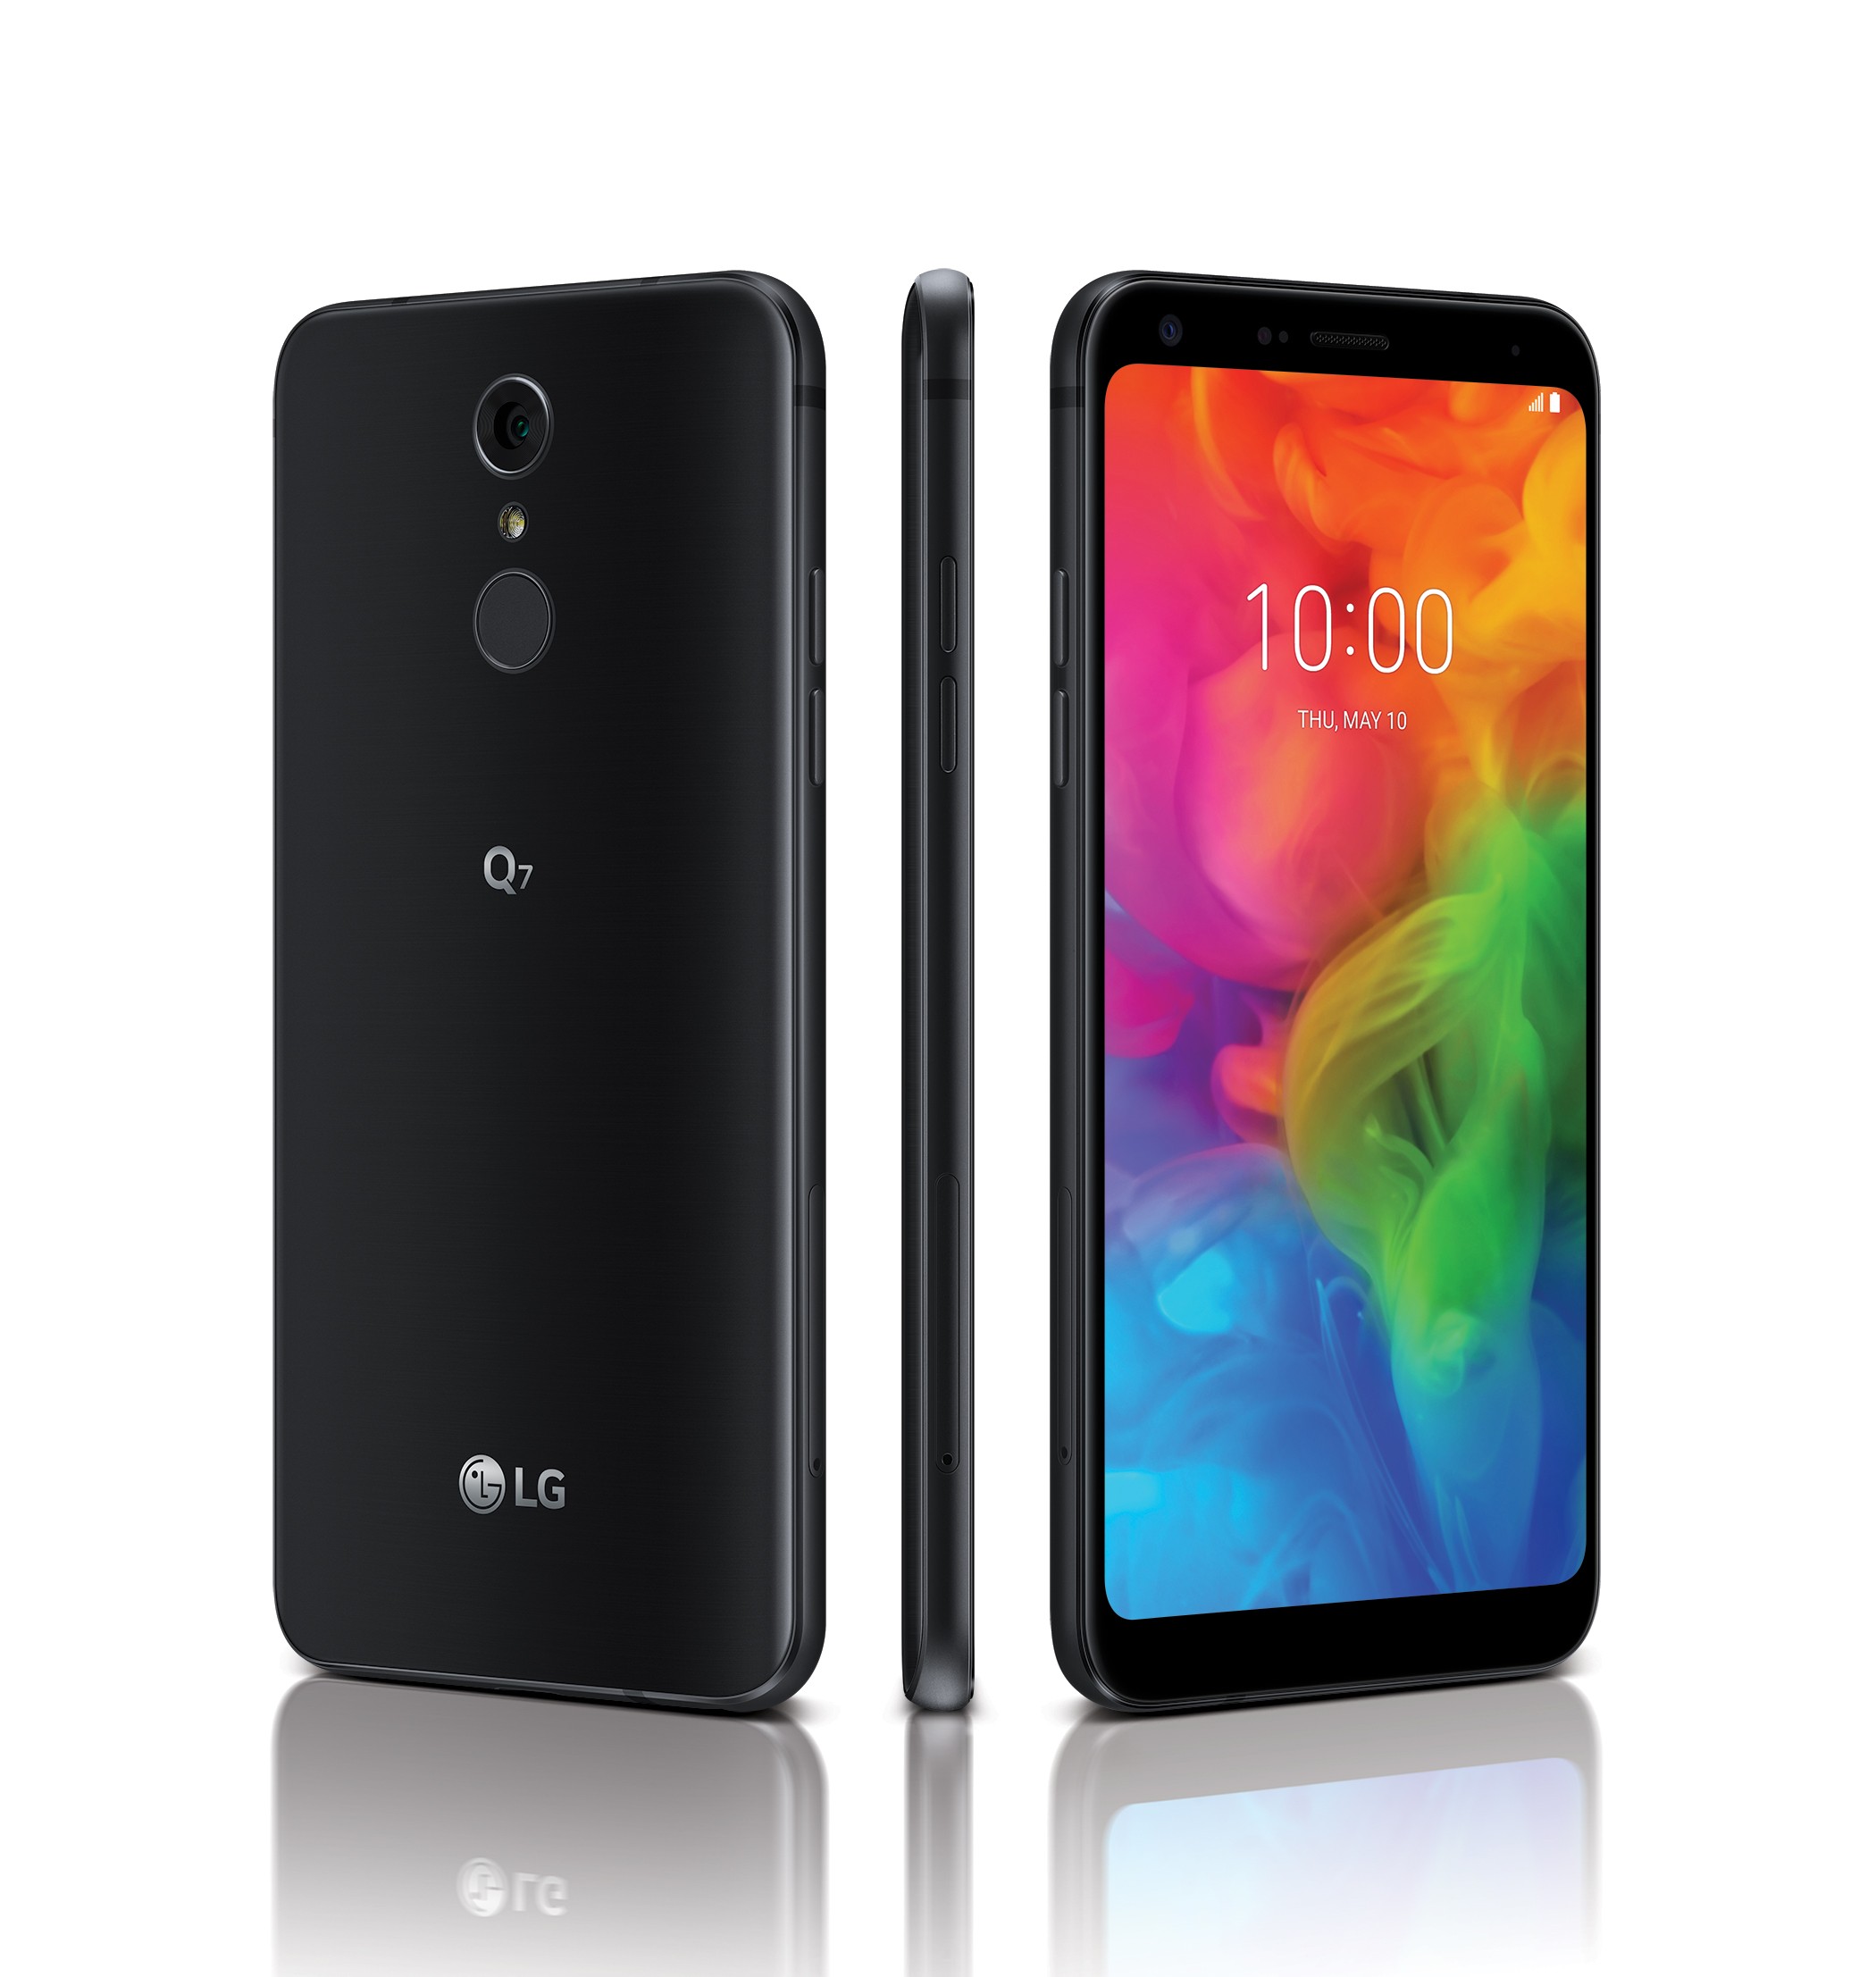 LG-Q7-01.jpg